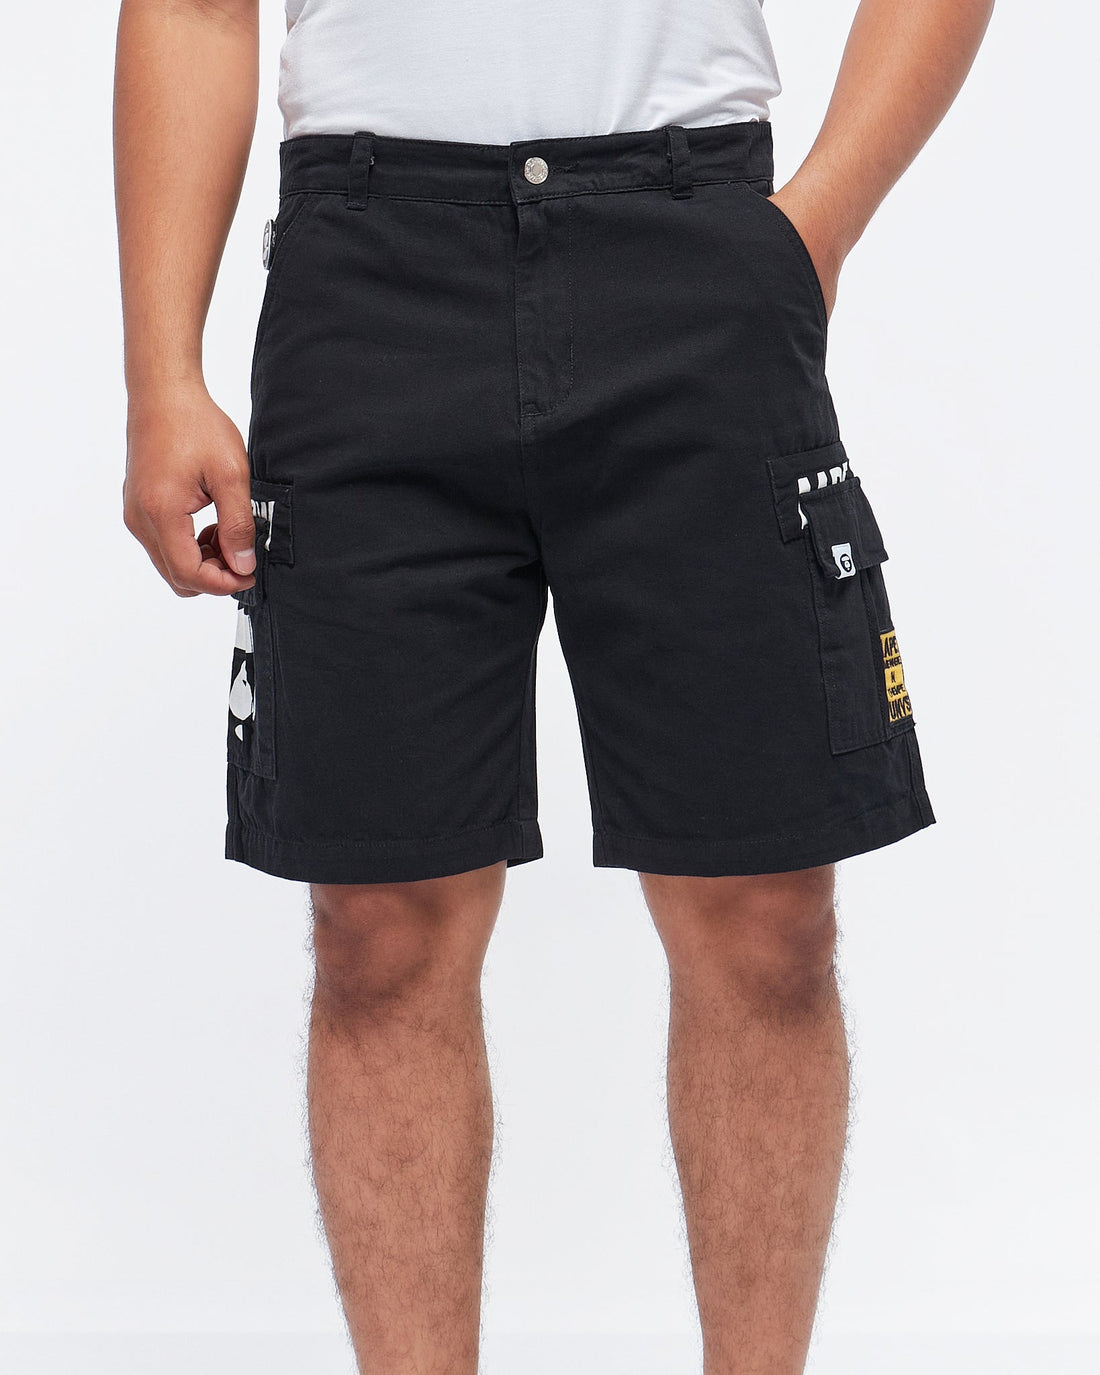 Mini Dots Men Short Pants 18.50 - MOI OUTFIT